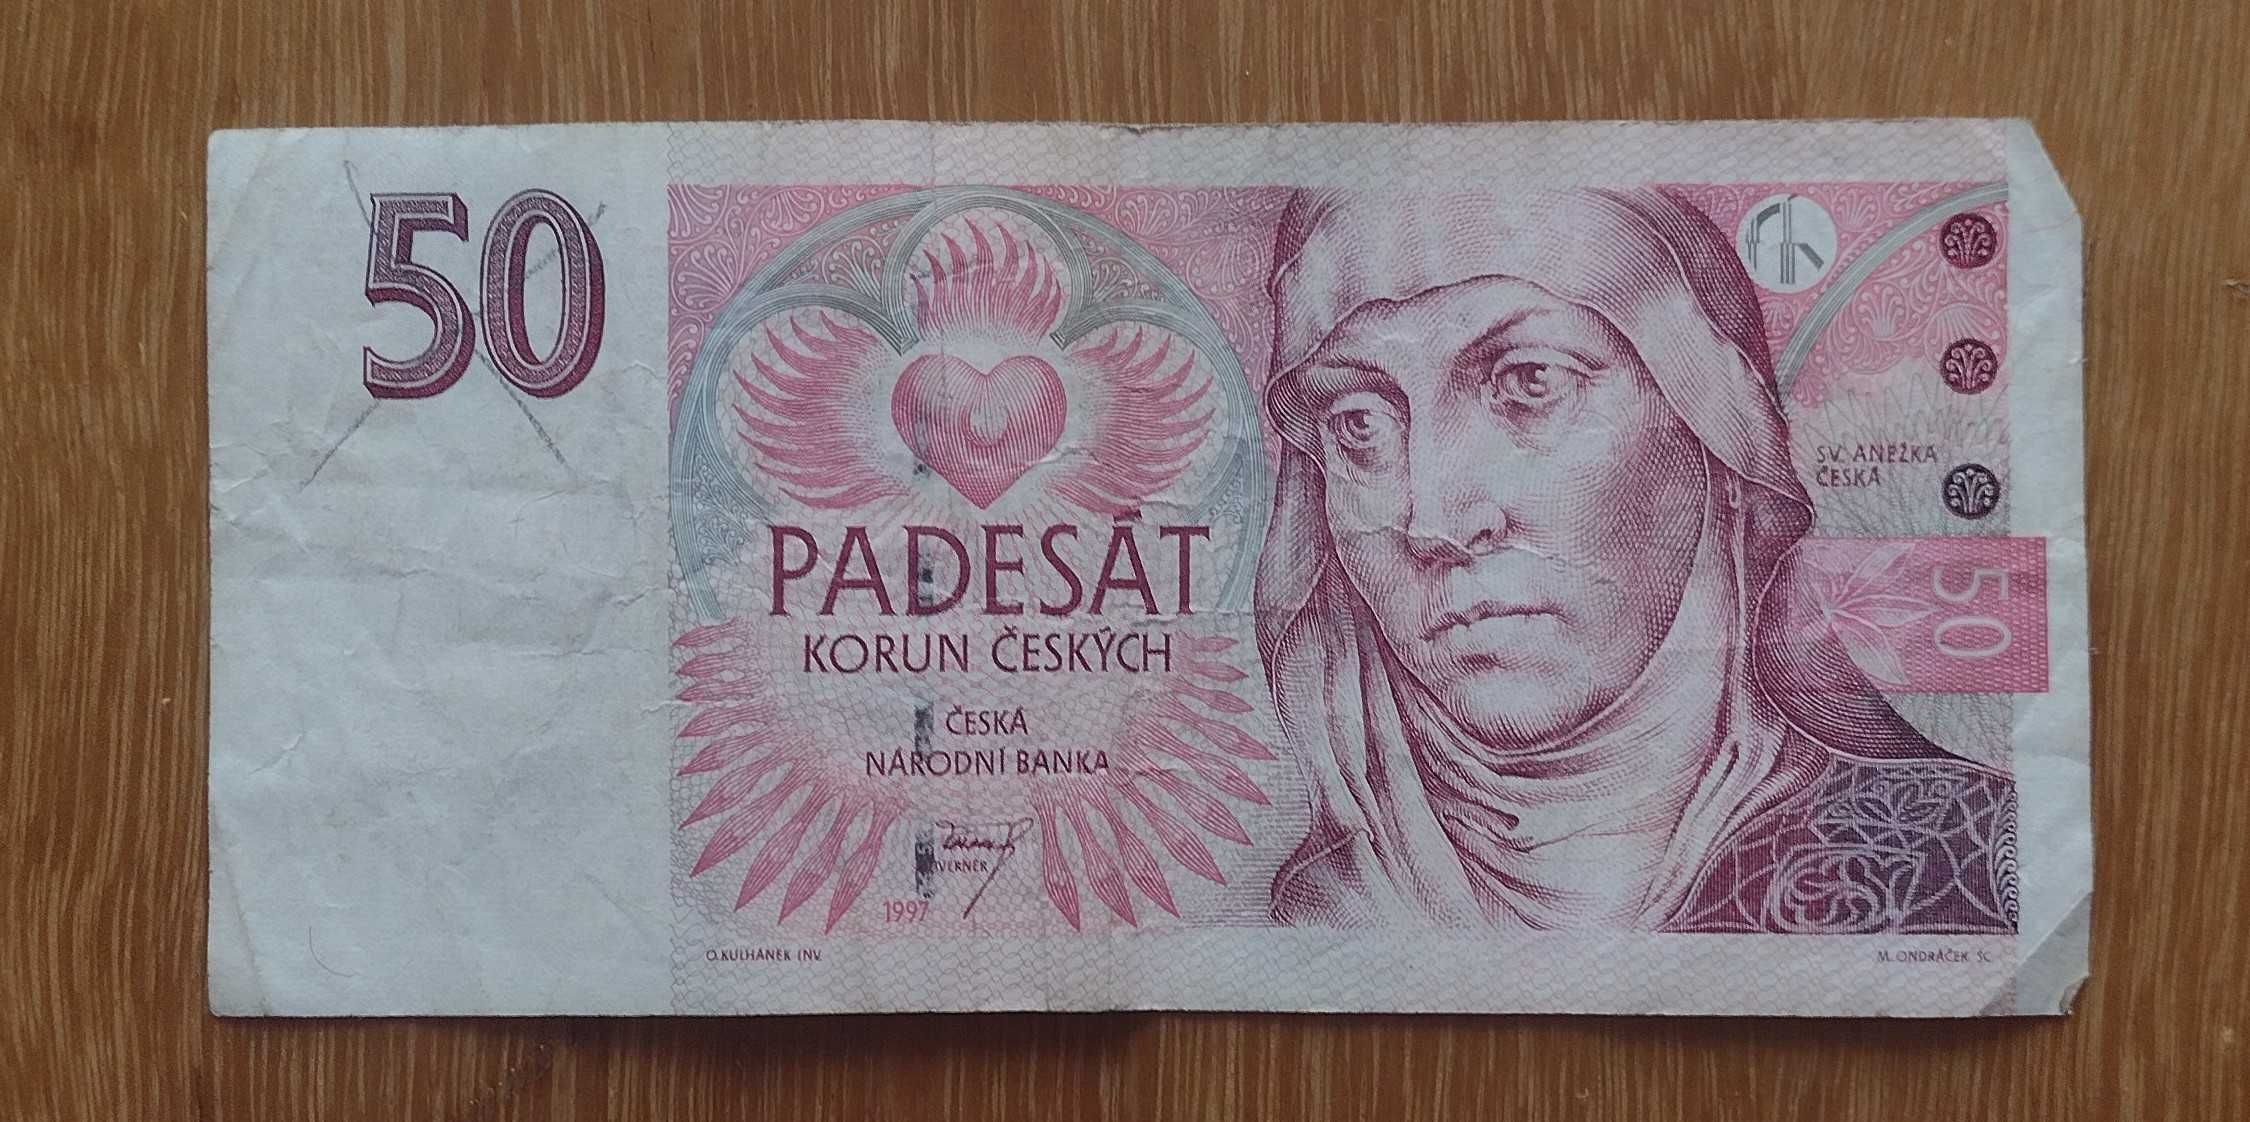 Banknot 50 koron czeskich 1997 r.